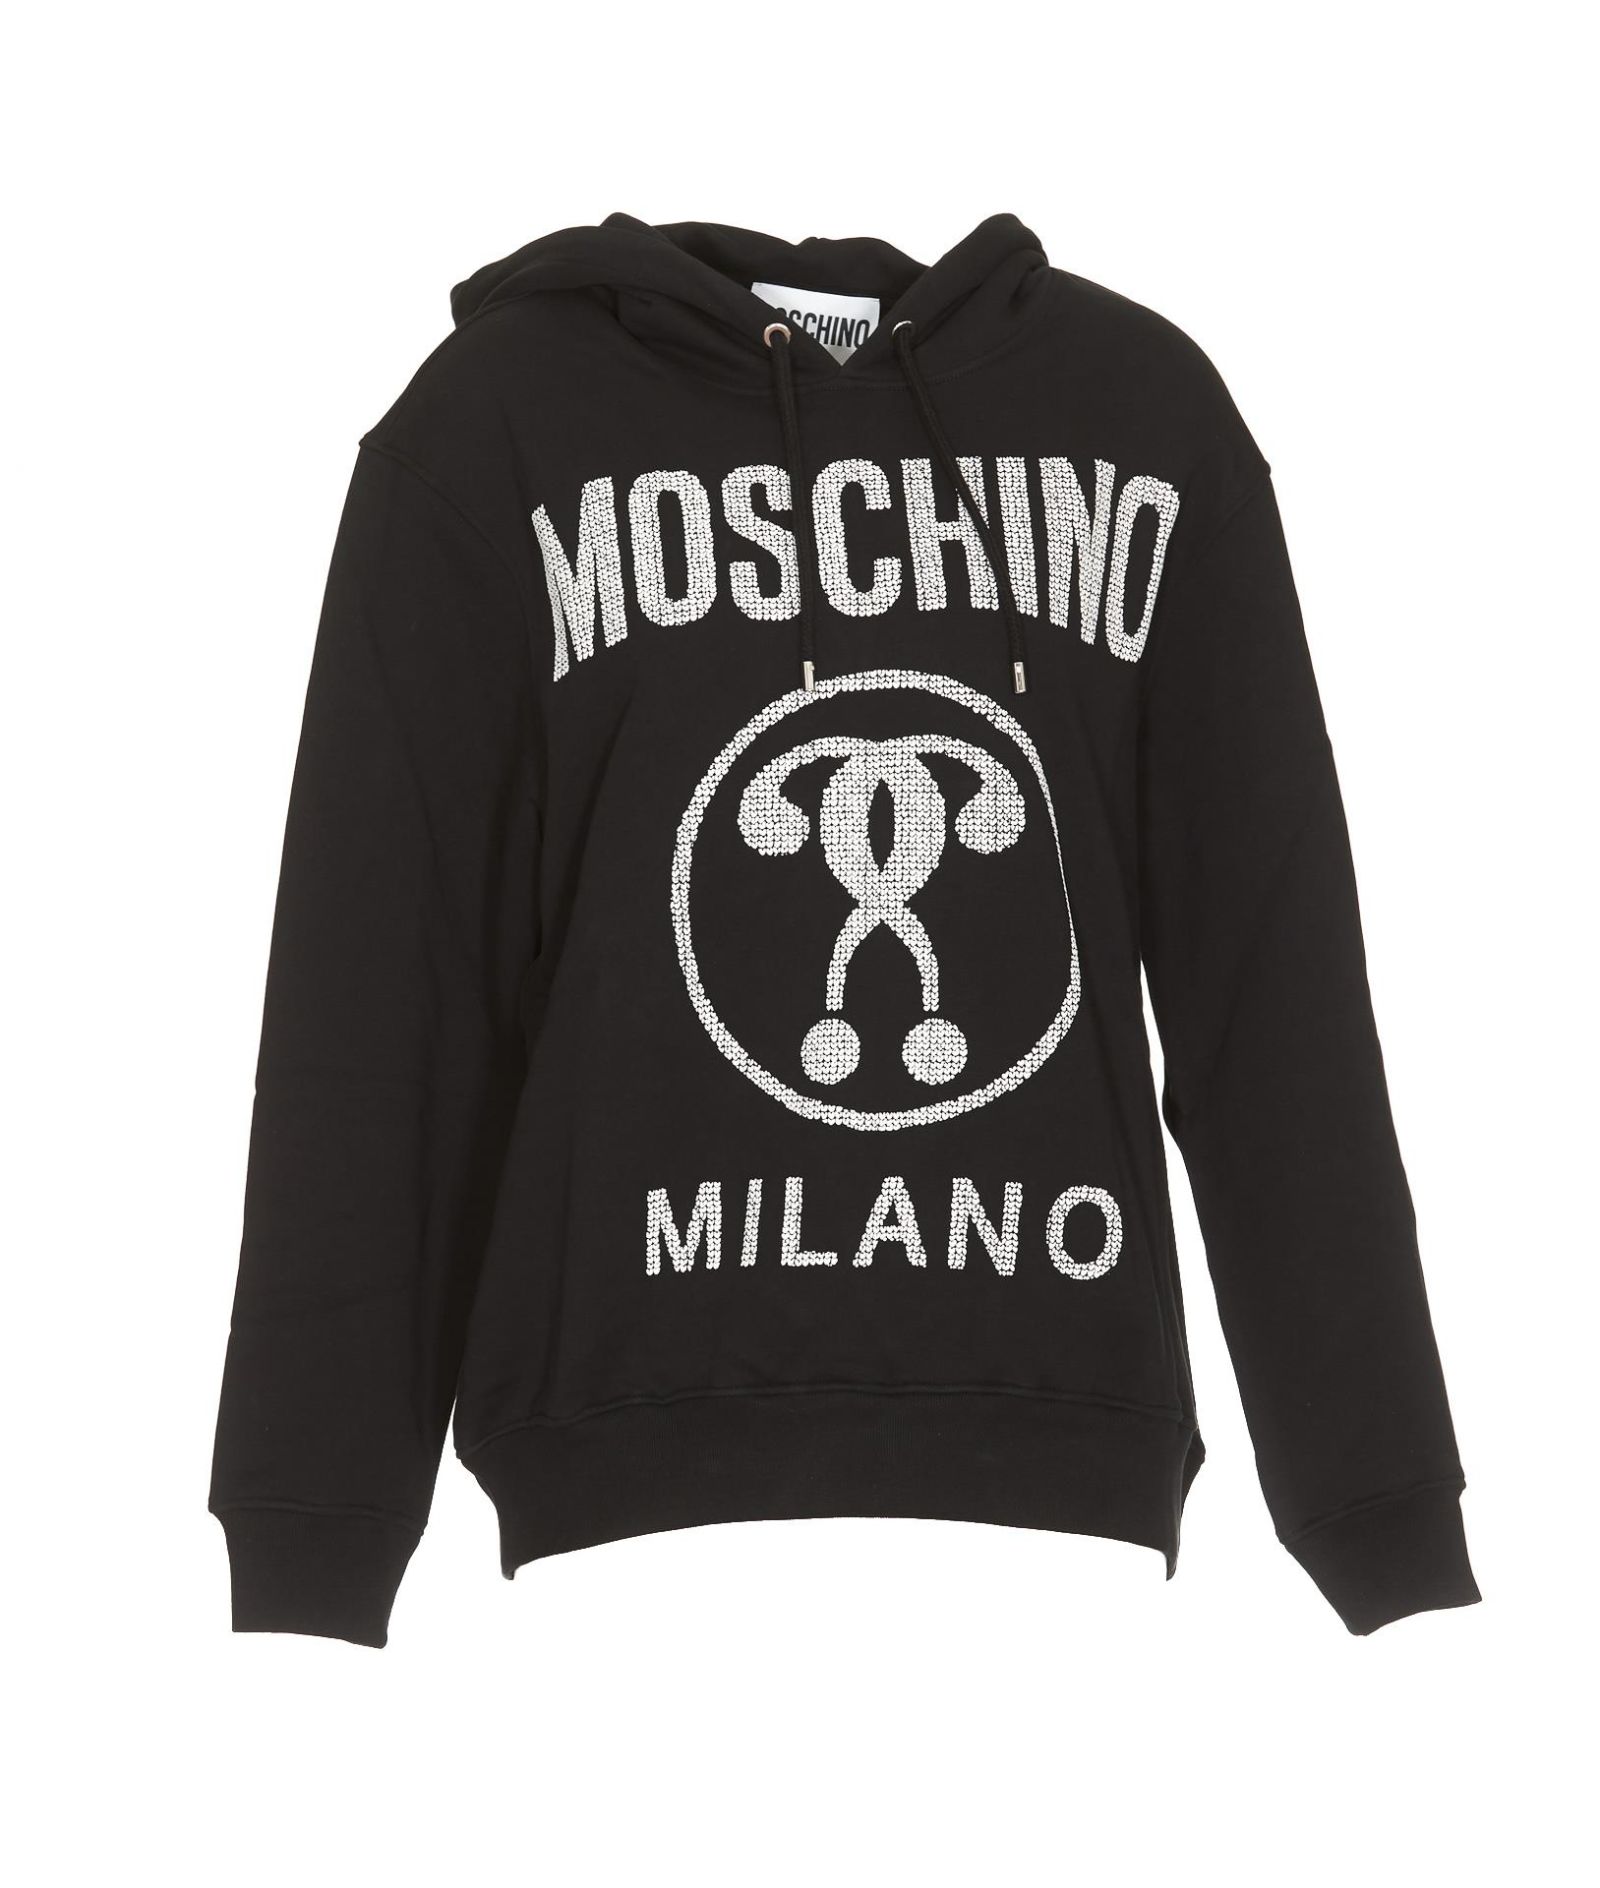 italist | Best price in the market for Moschino Moschino Moschino ...